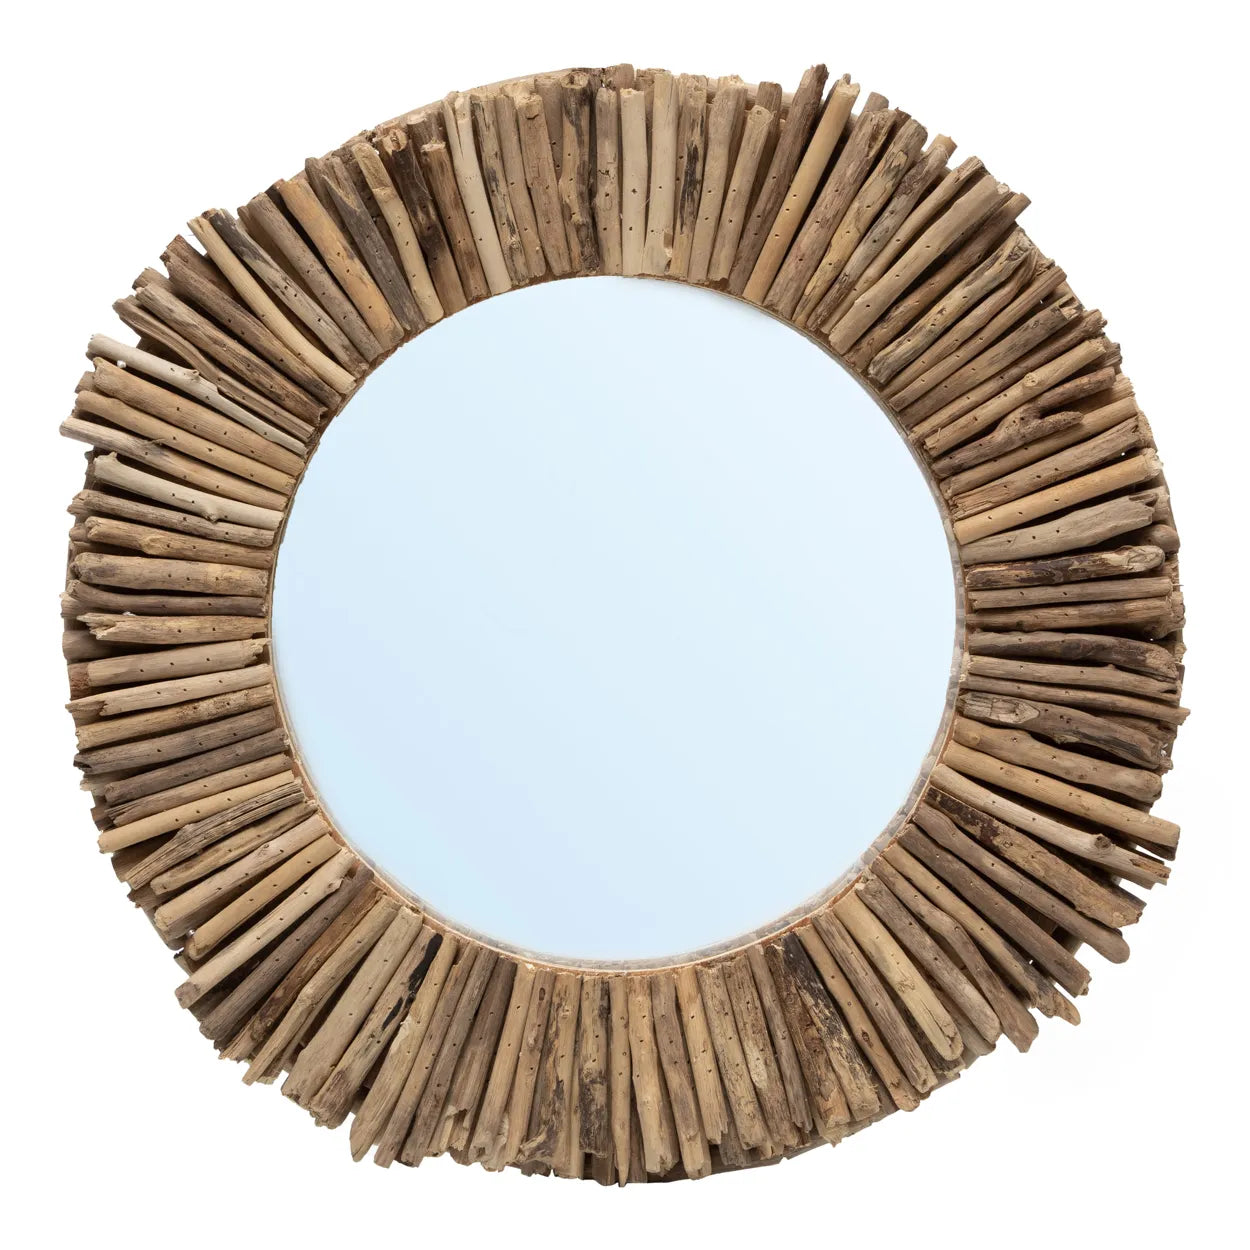 Cudillero Driftwood Mirror - Driftwood Mirror